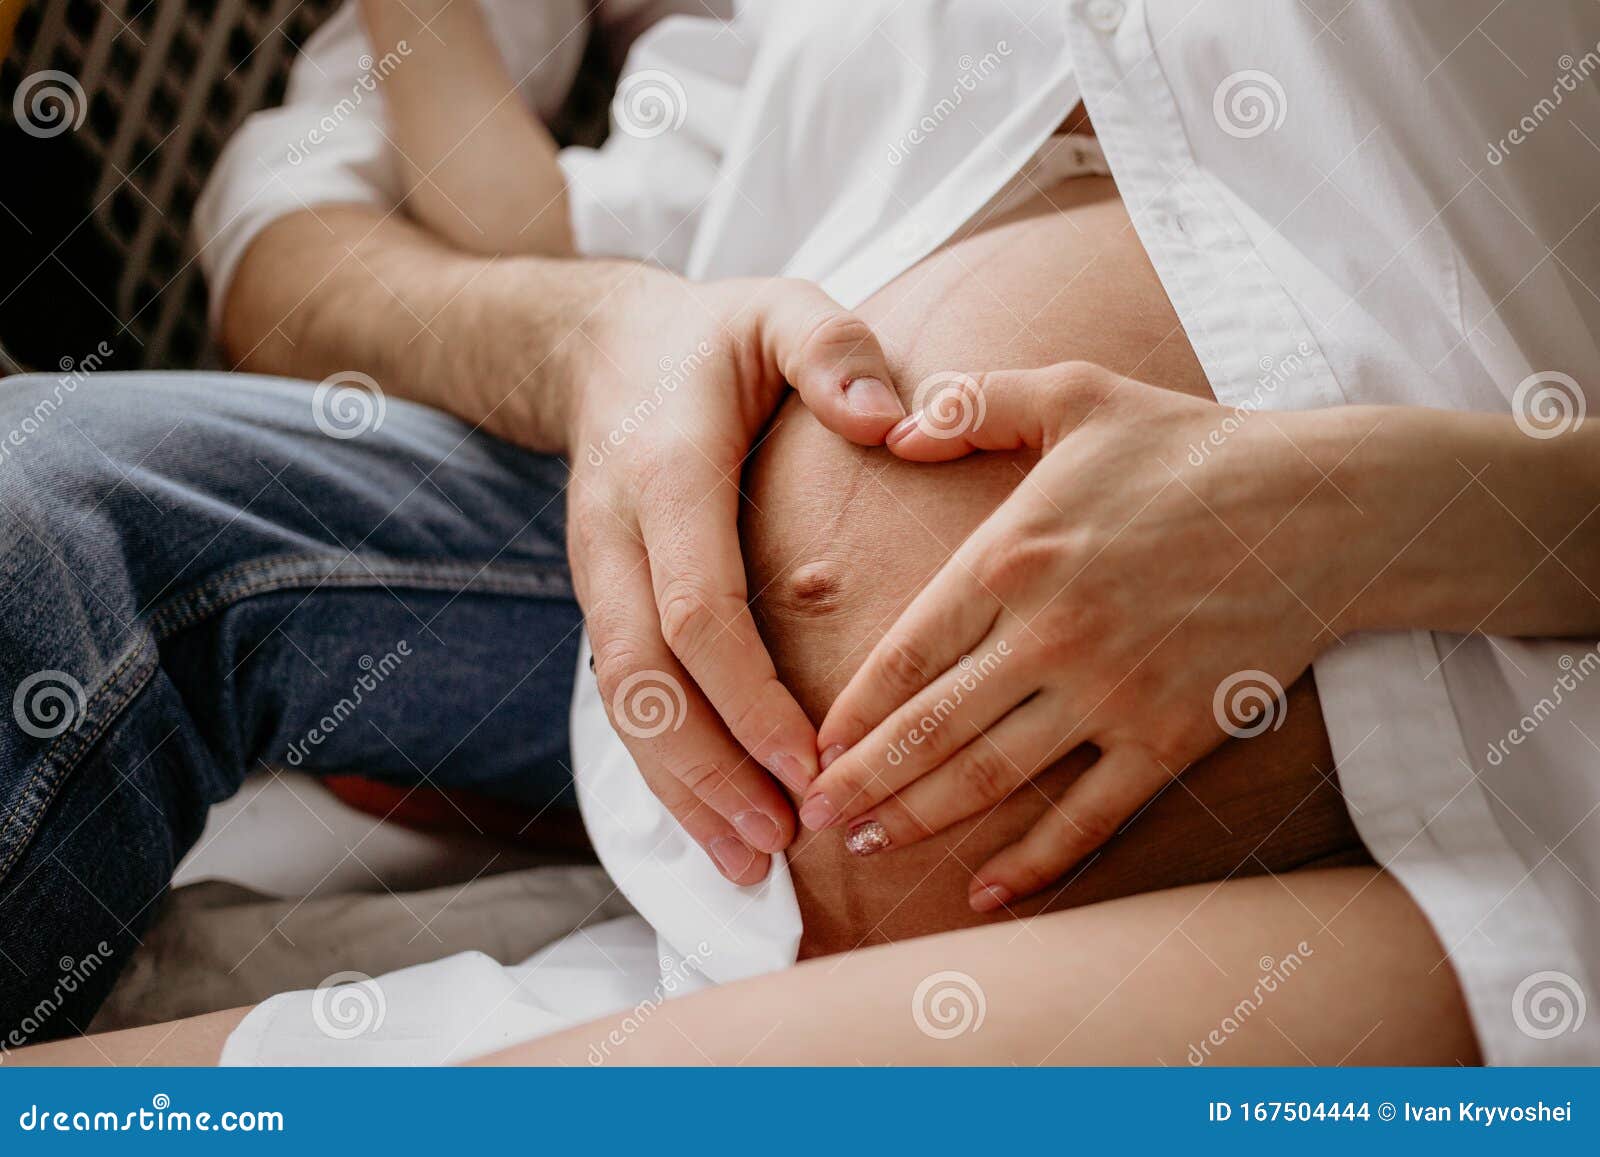 Breast female man touching LovePanky